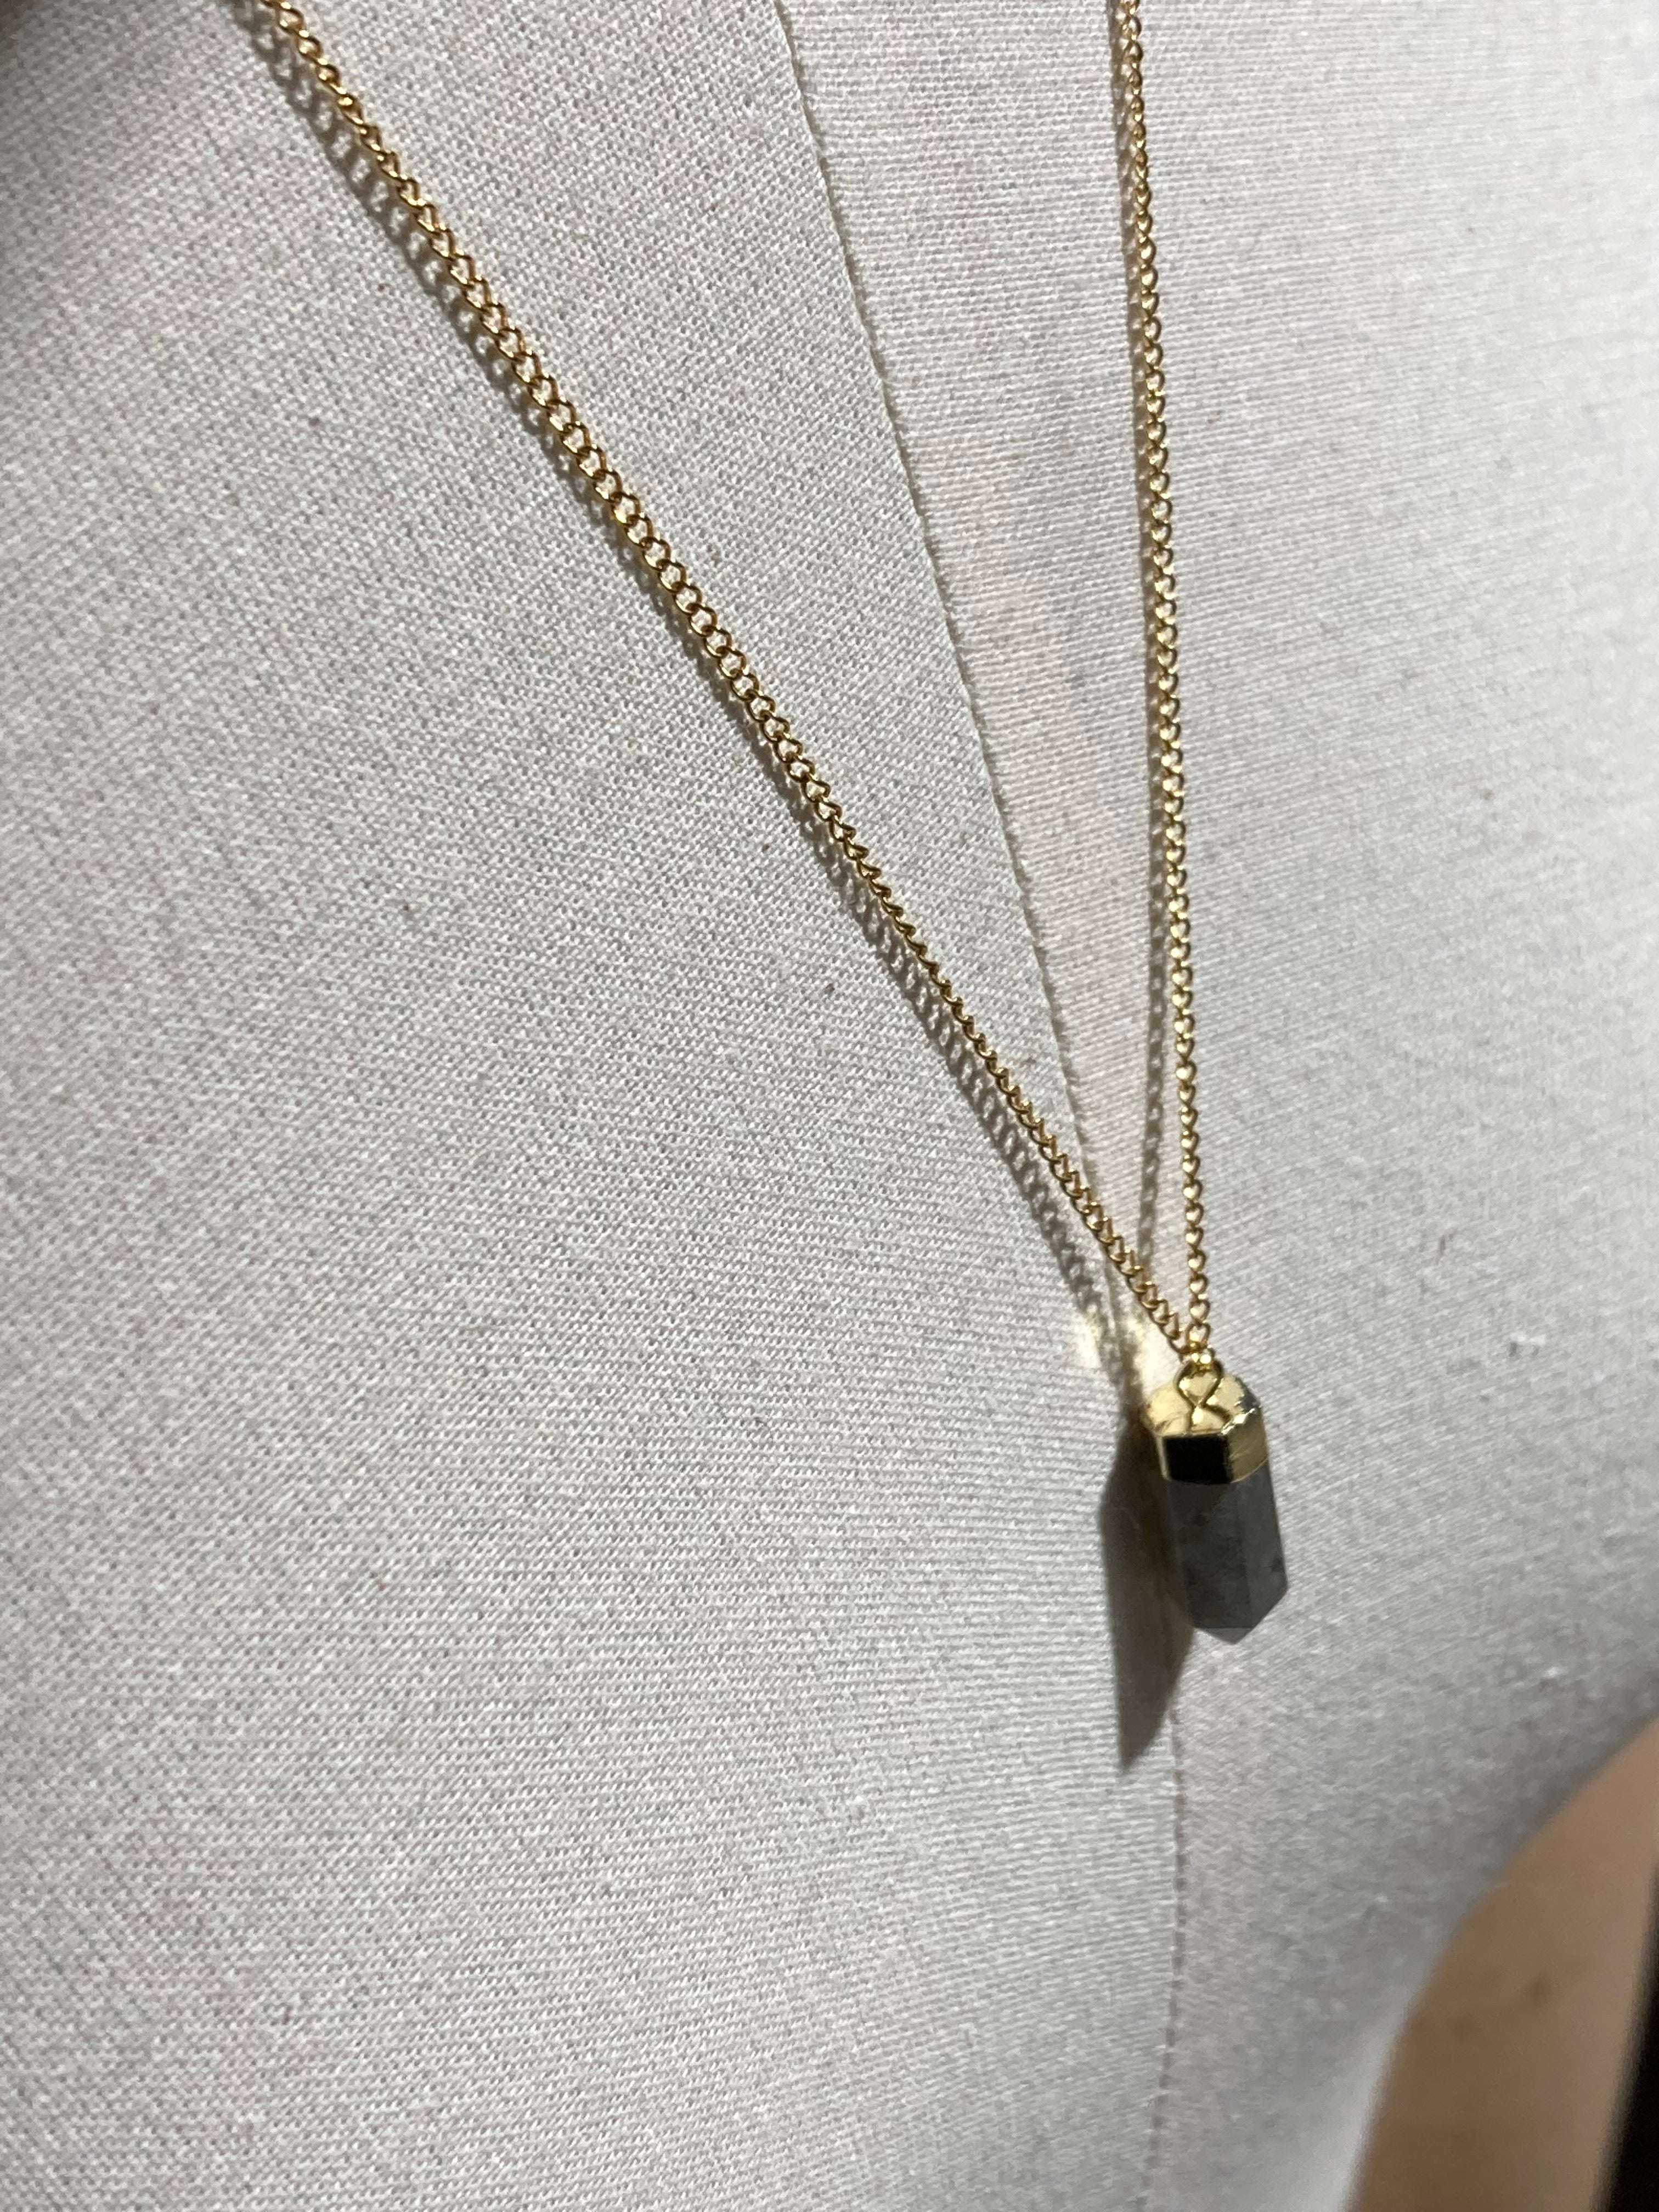 llayers-mens-women-jewelry-stone-labradorite-point-gold-pendant-newyork-brooklyn-W3